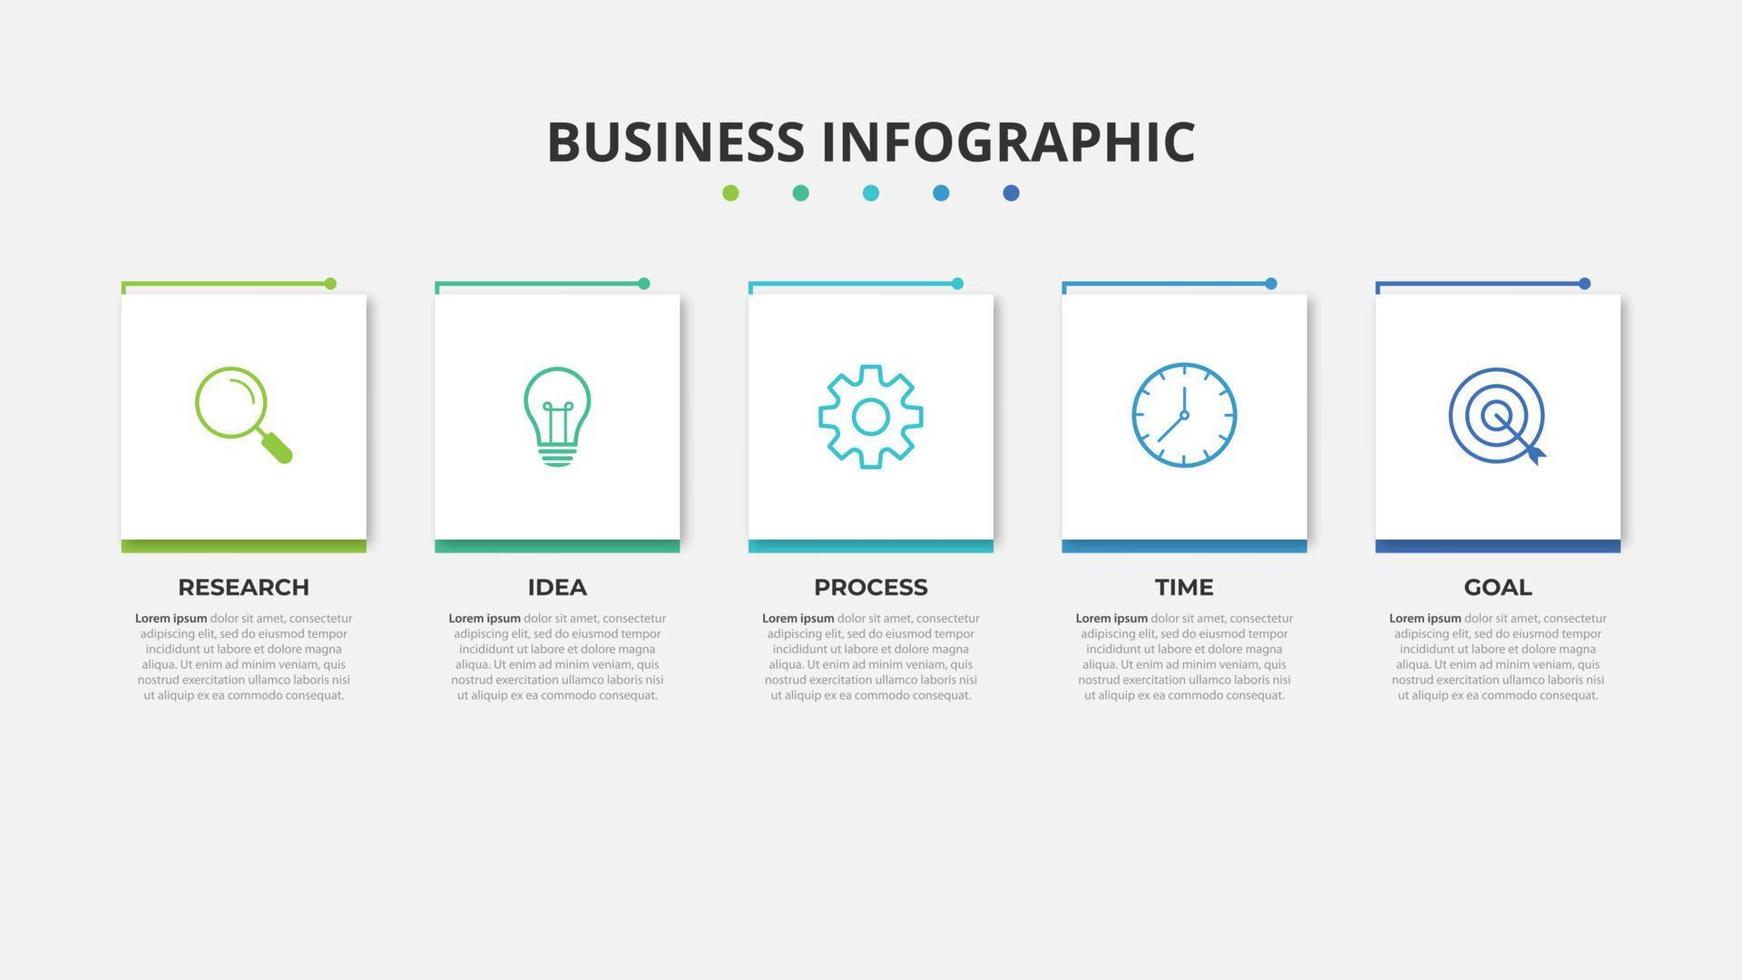 Infografik-Vorlage für Präsentationsunternehmen mit 5 Optionen. Vektor-Illustration. vektor